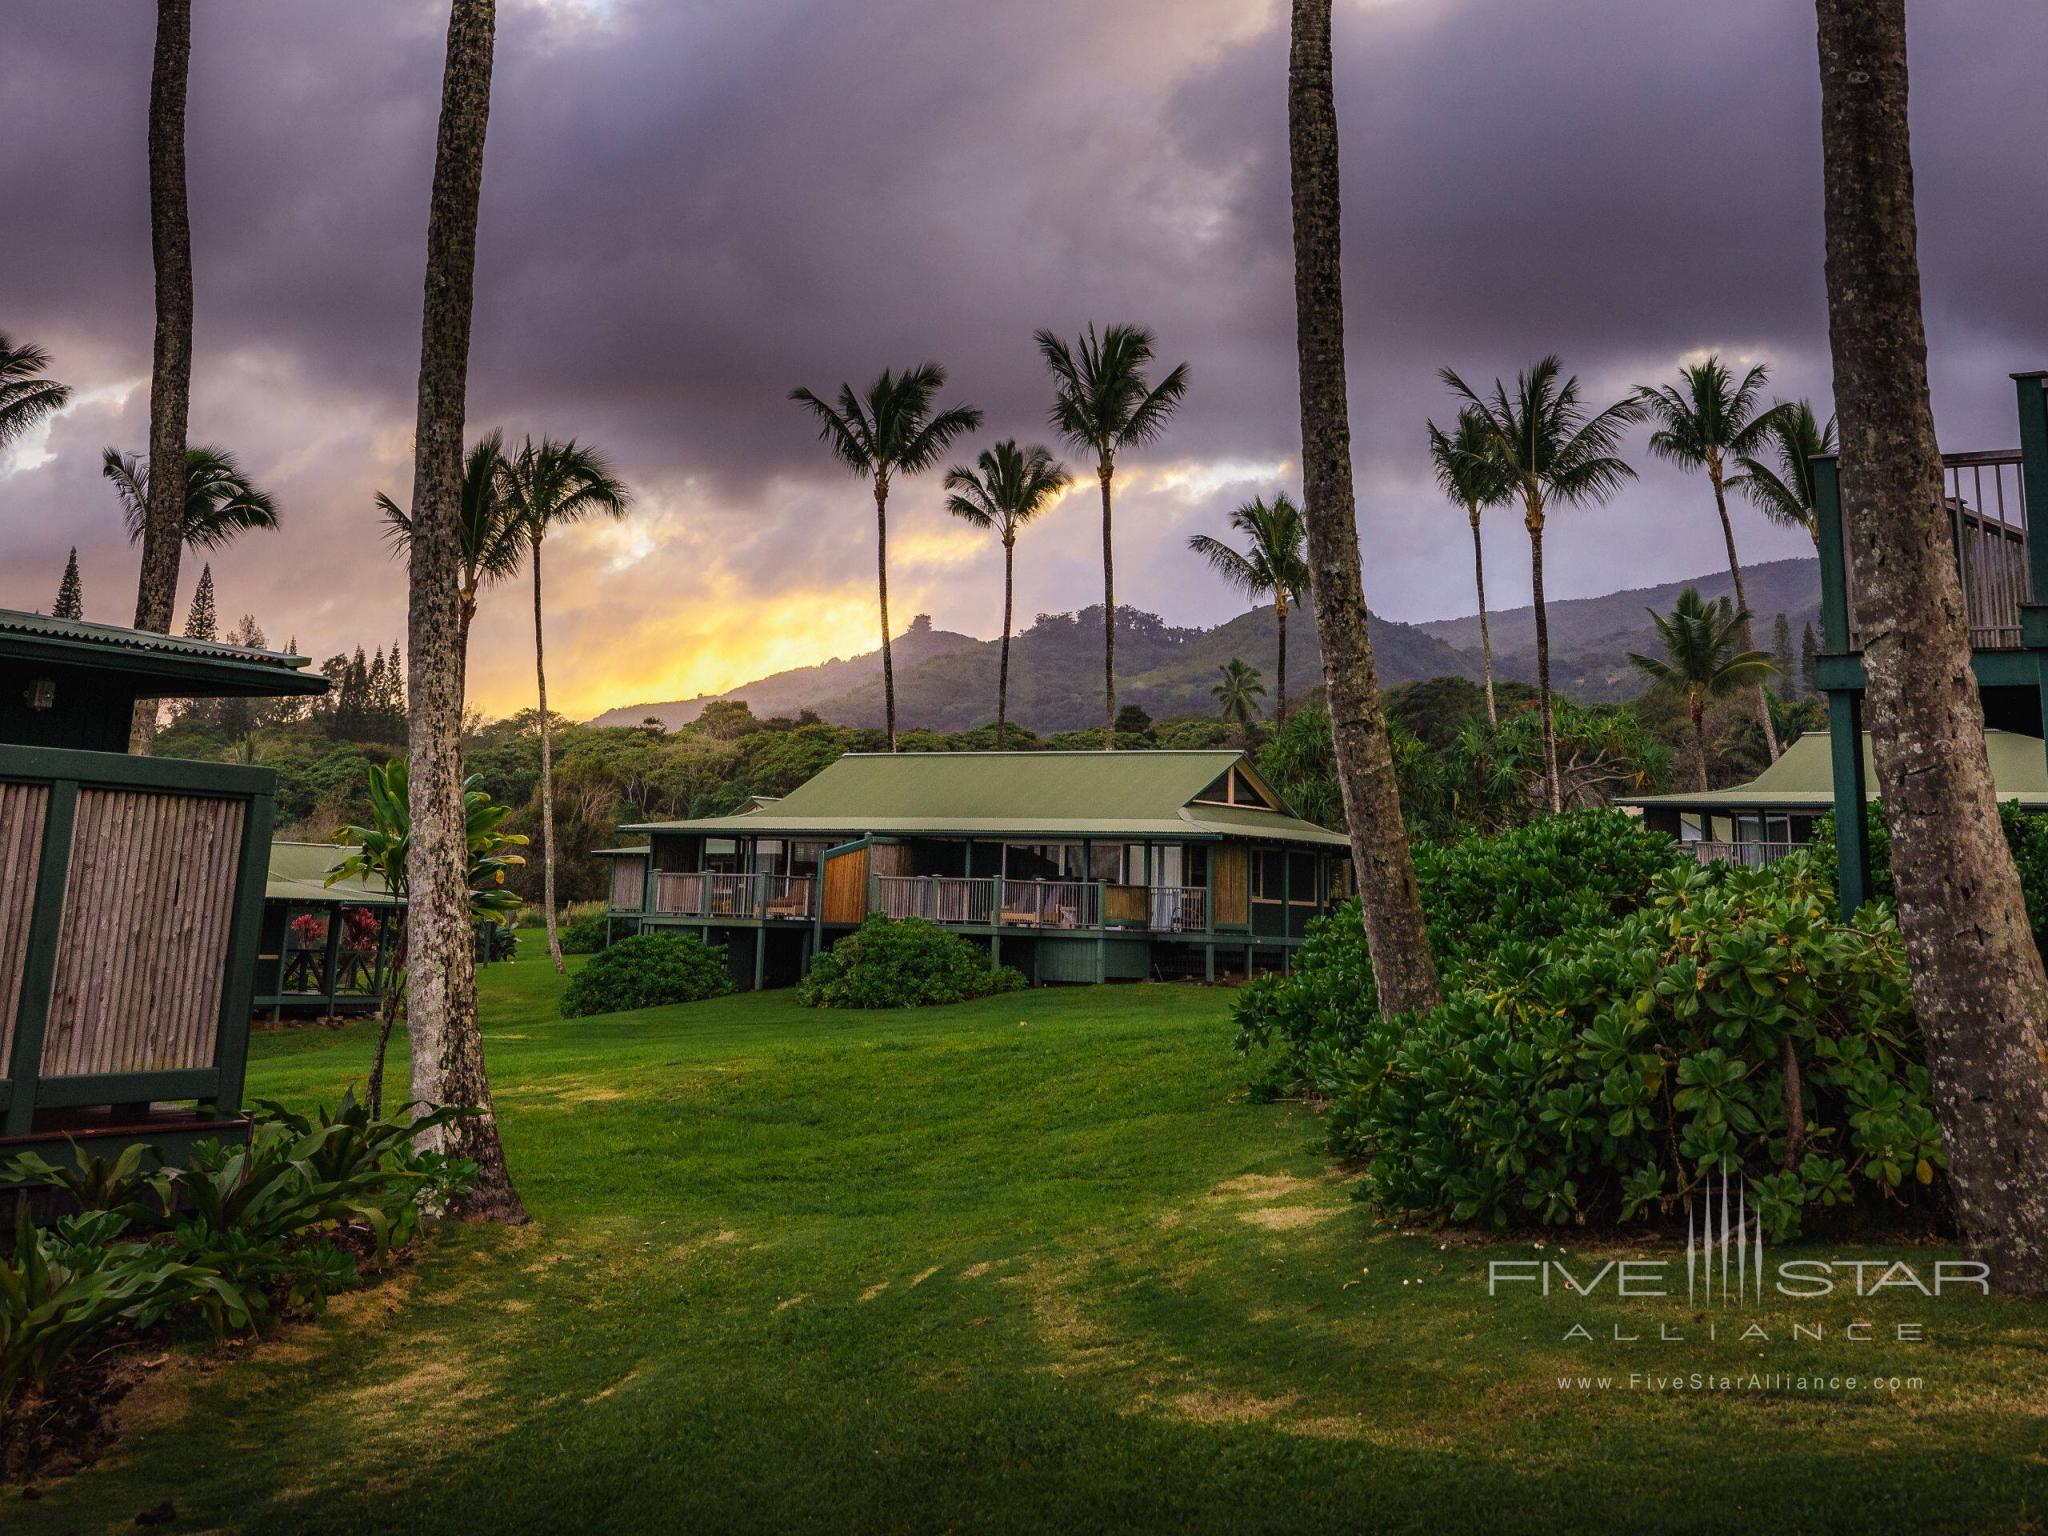 Hana-Maui Resort